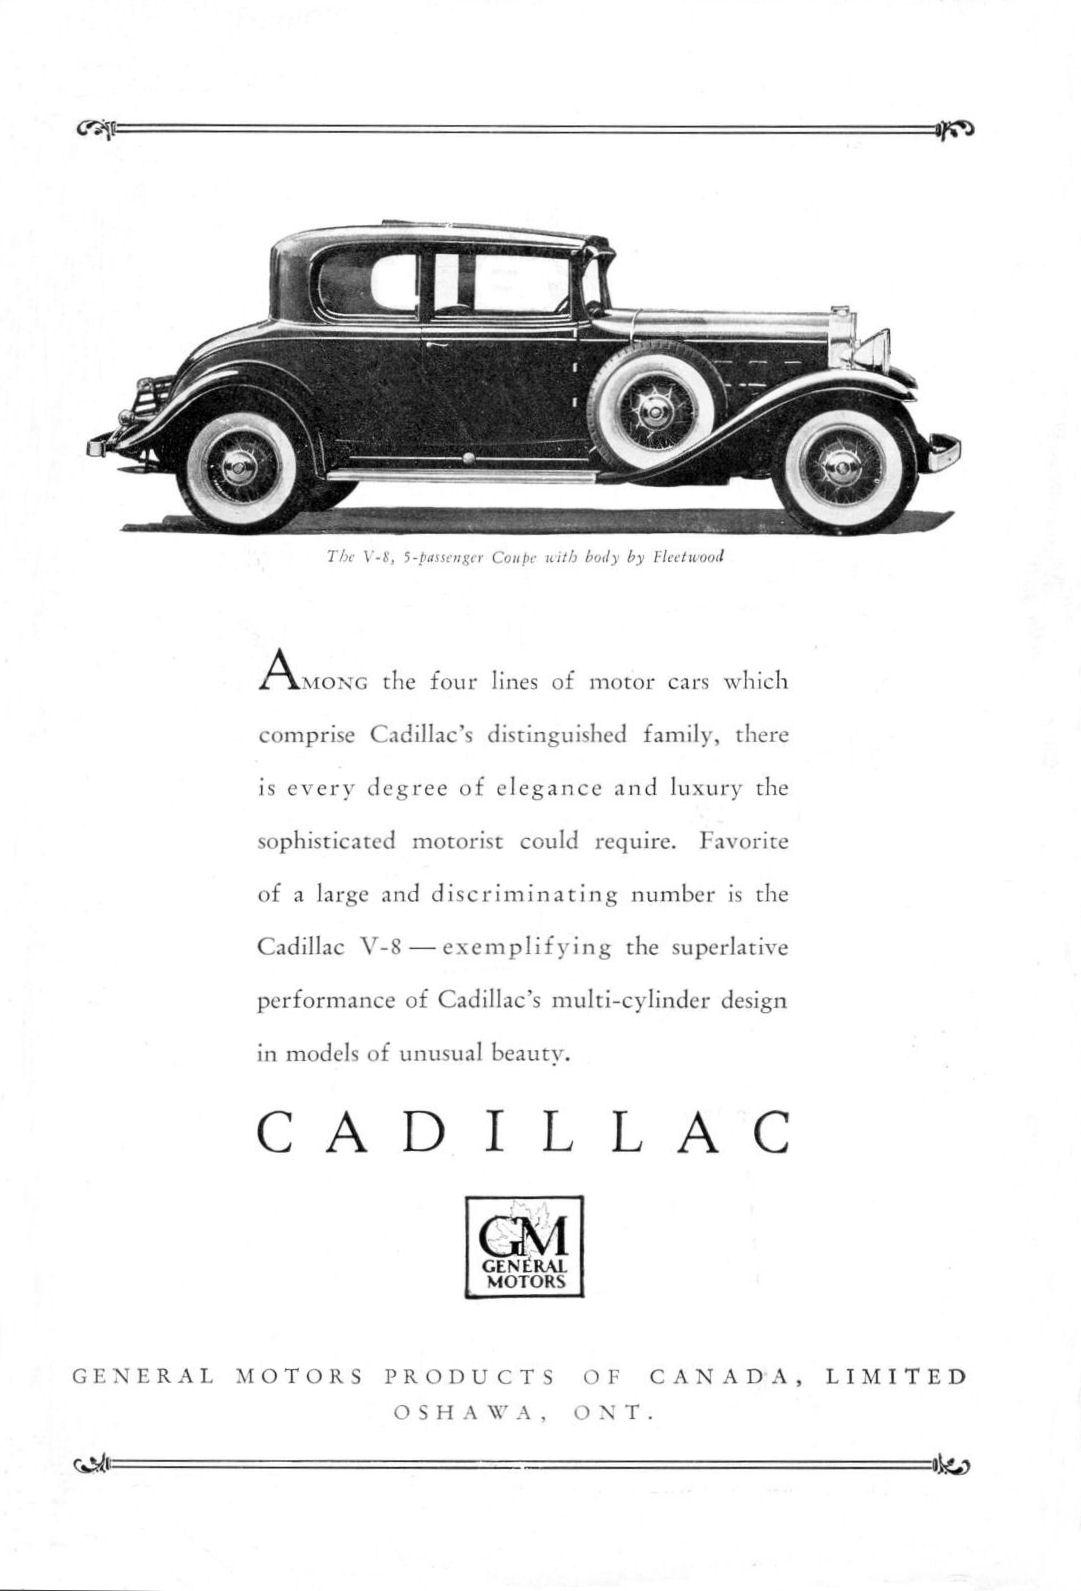 1931 Cadillac Ad (Cdn)-01